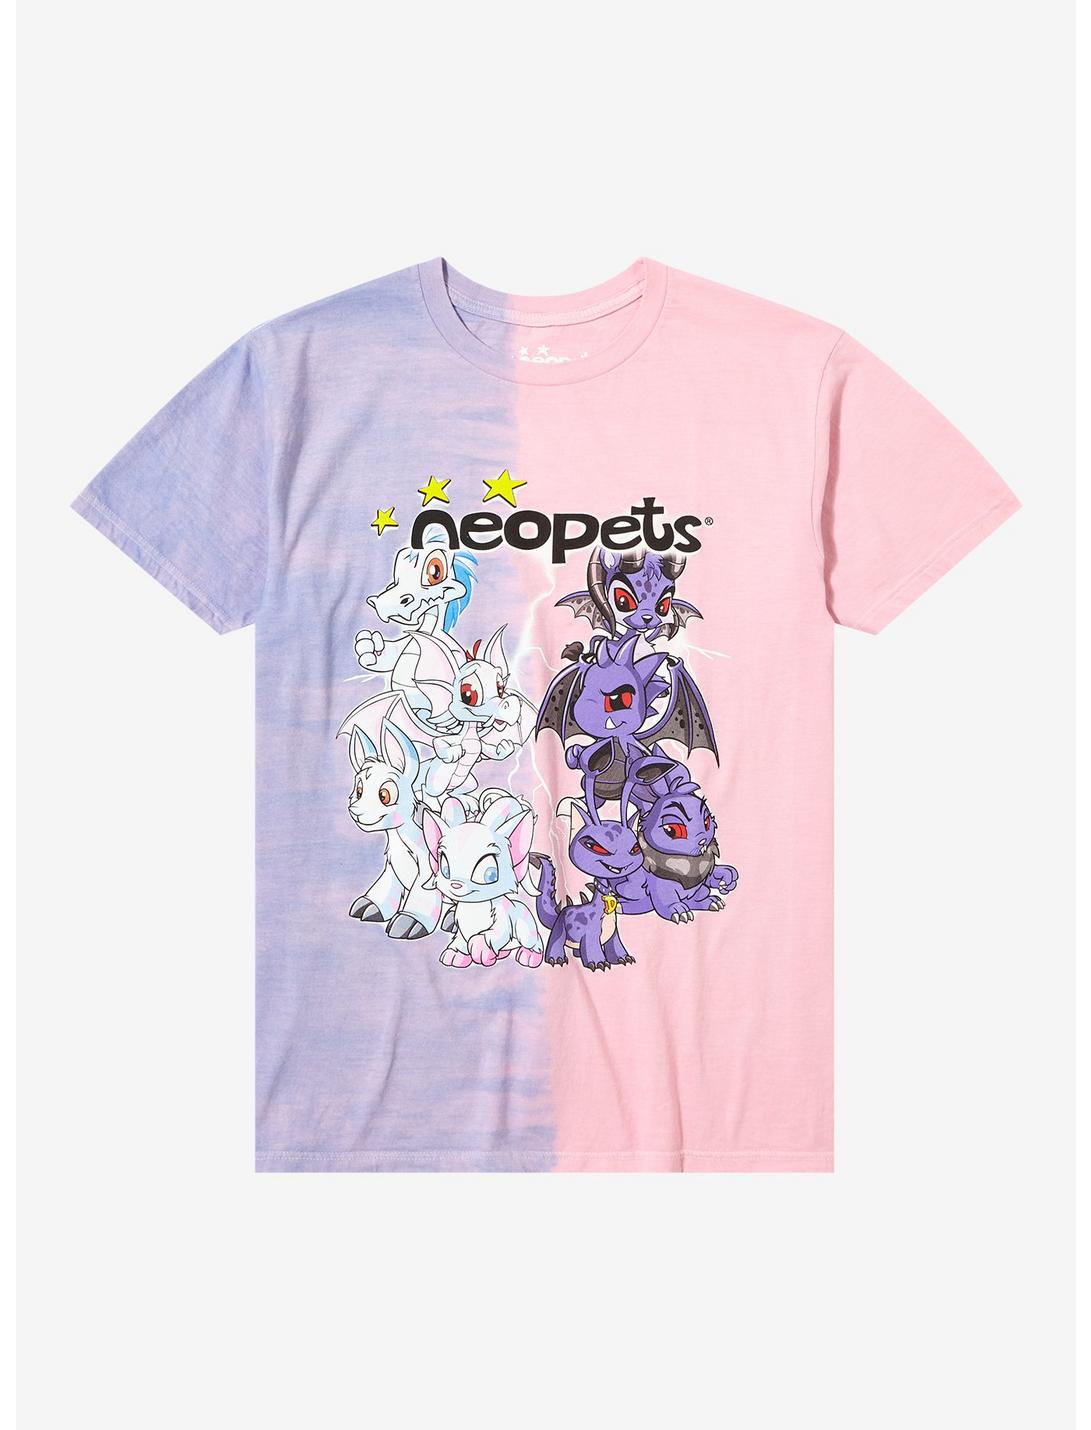 Neopets Group Split Dye Boyfriend Fit Girls T-Shirt, MULTI, hi-res